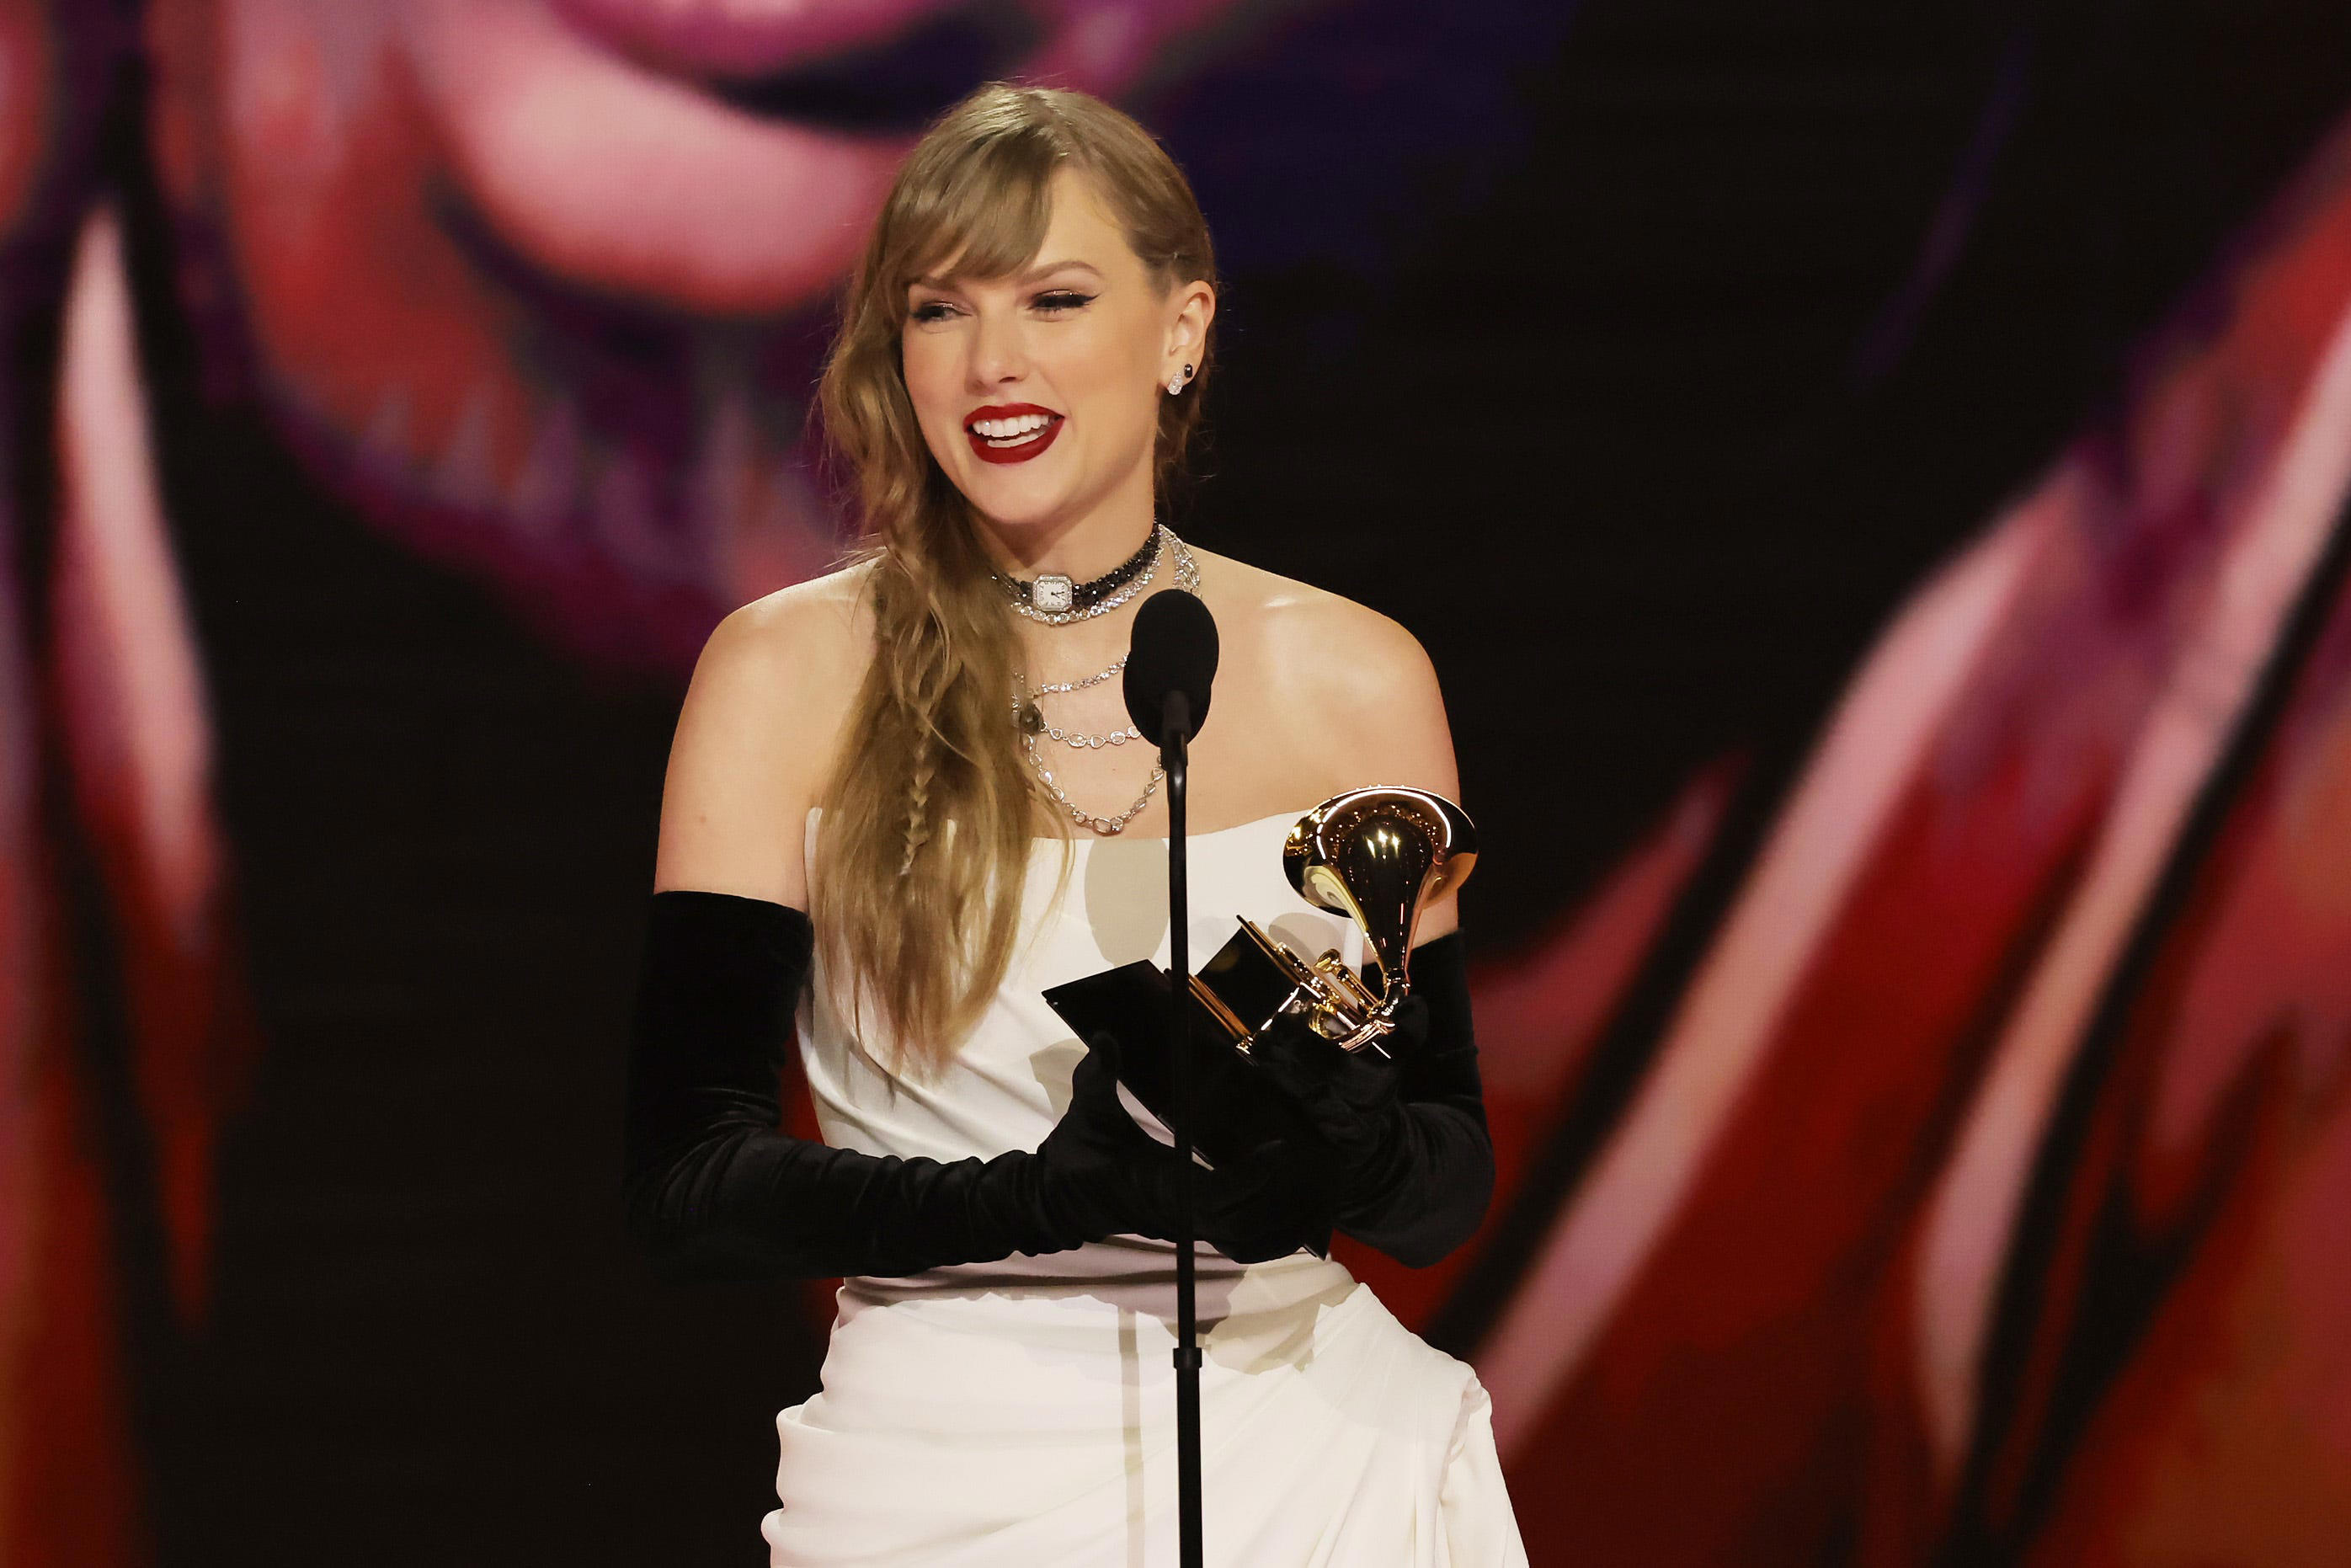 Taylor Swift's new album, 'Error 321' and historic Grammy win